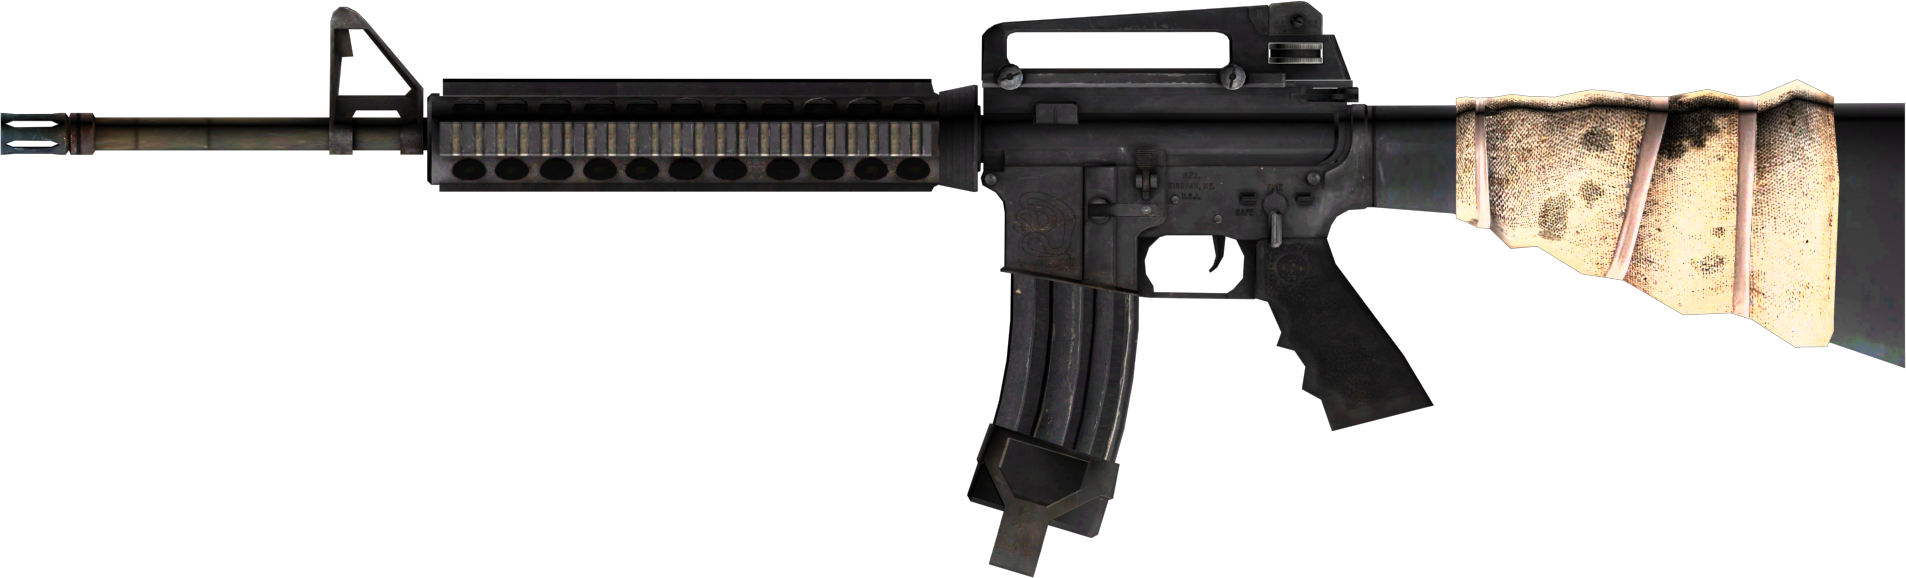 M16 Usa Assault Rifle Png - Gun, Transparent background PNG HD thumbnail